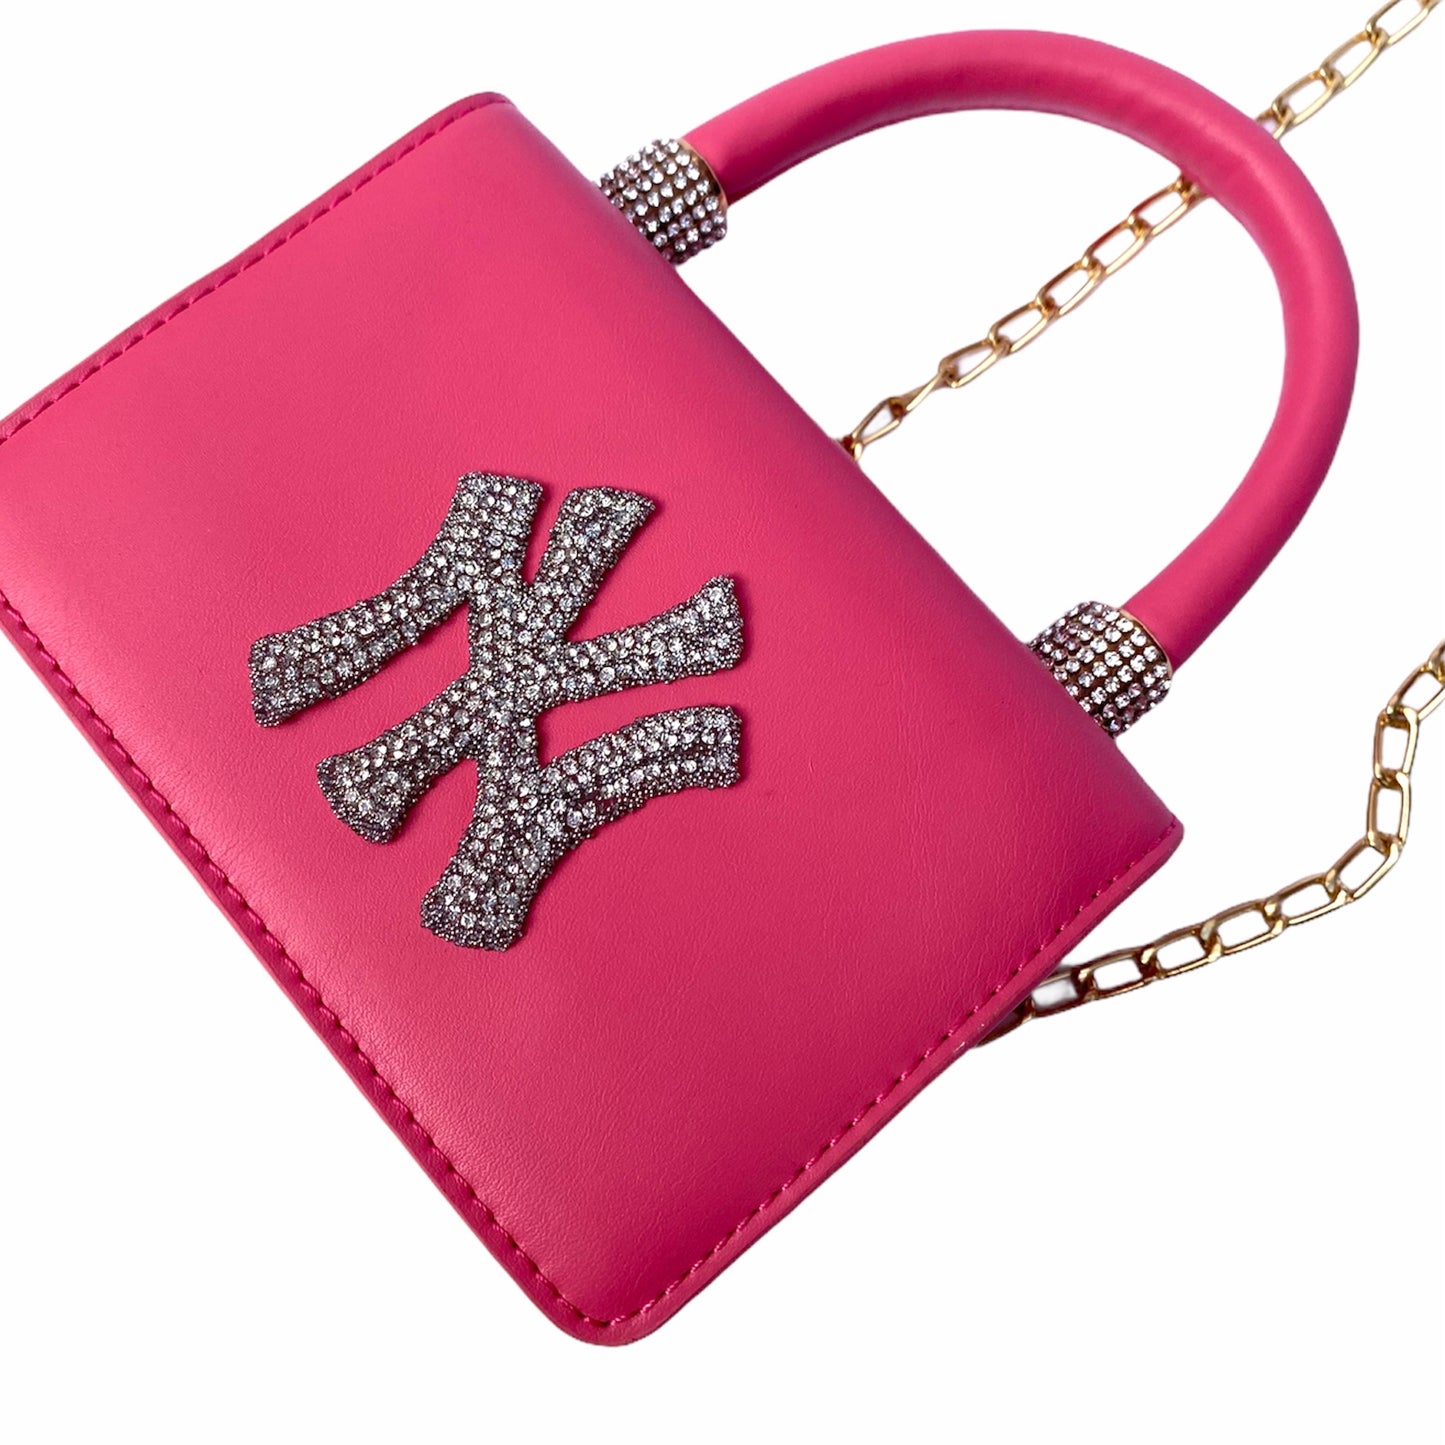 Pink NY Rhinestone Mini Handbag